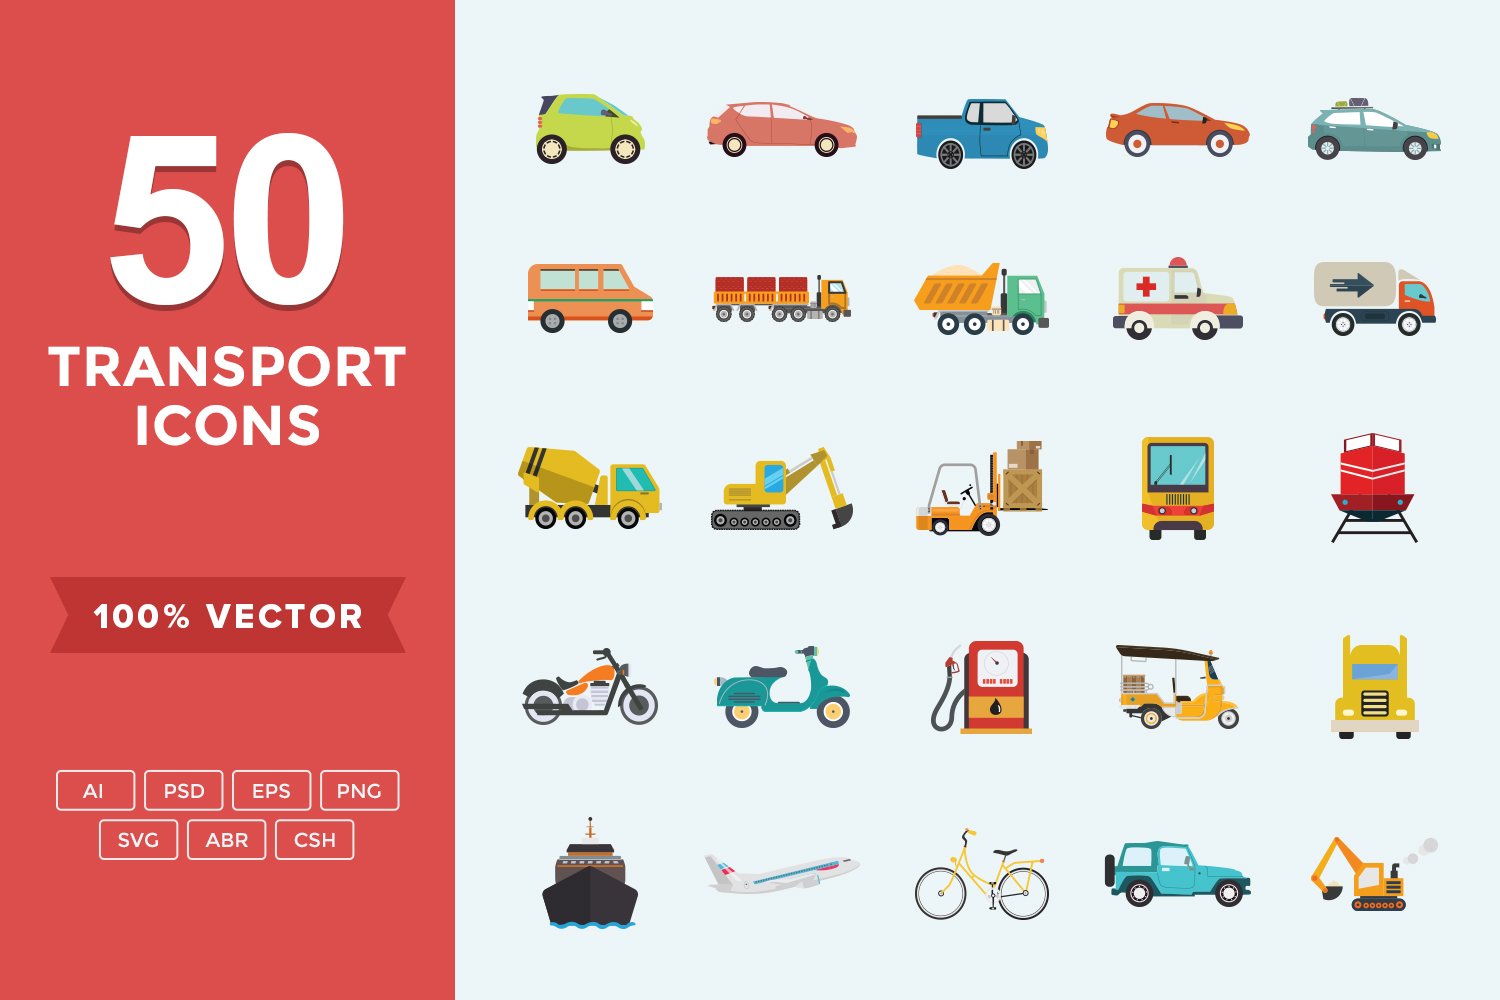 Flat Icons Transport Set cover image.